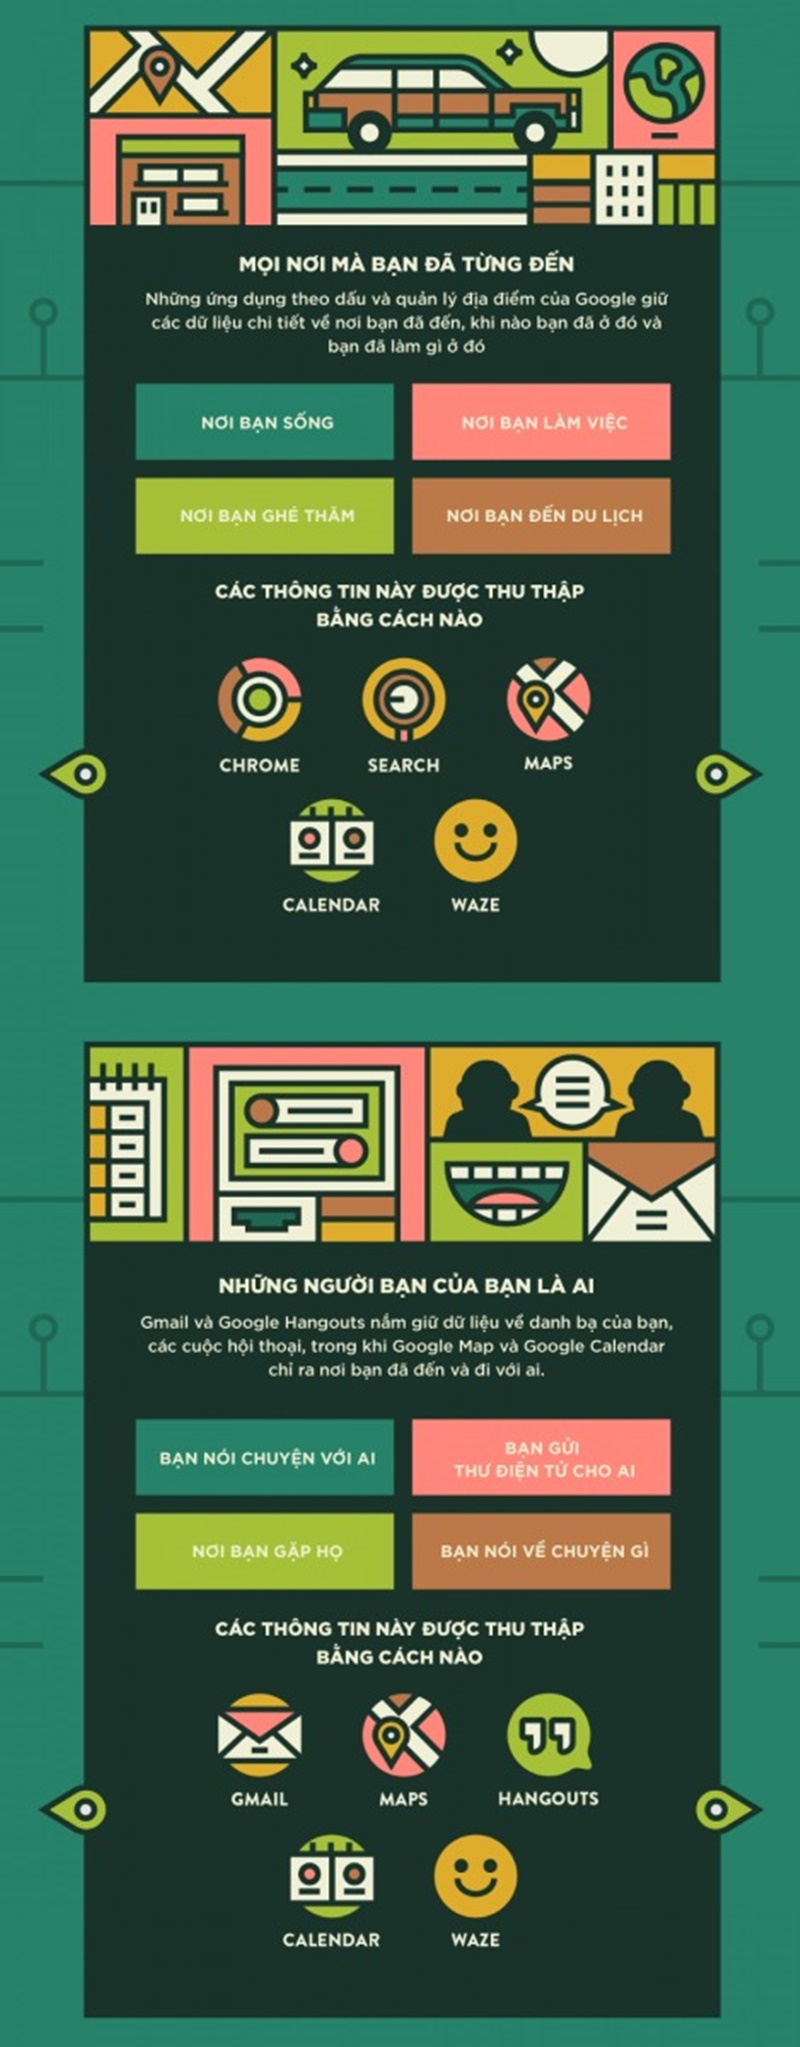 infographic-google-biet-duoc-nhung-gi-ve-ban4